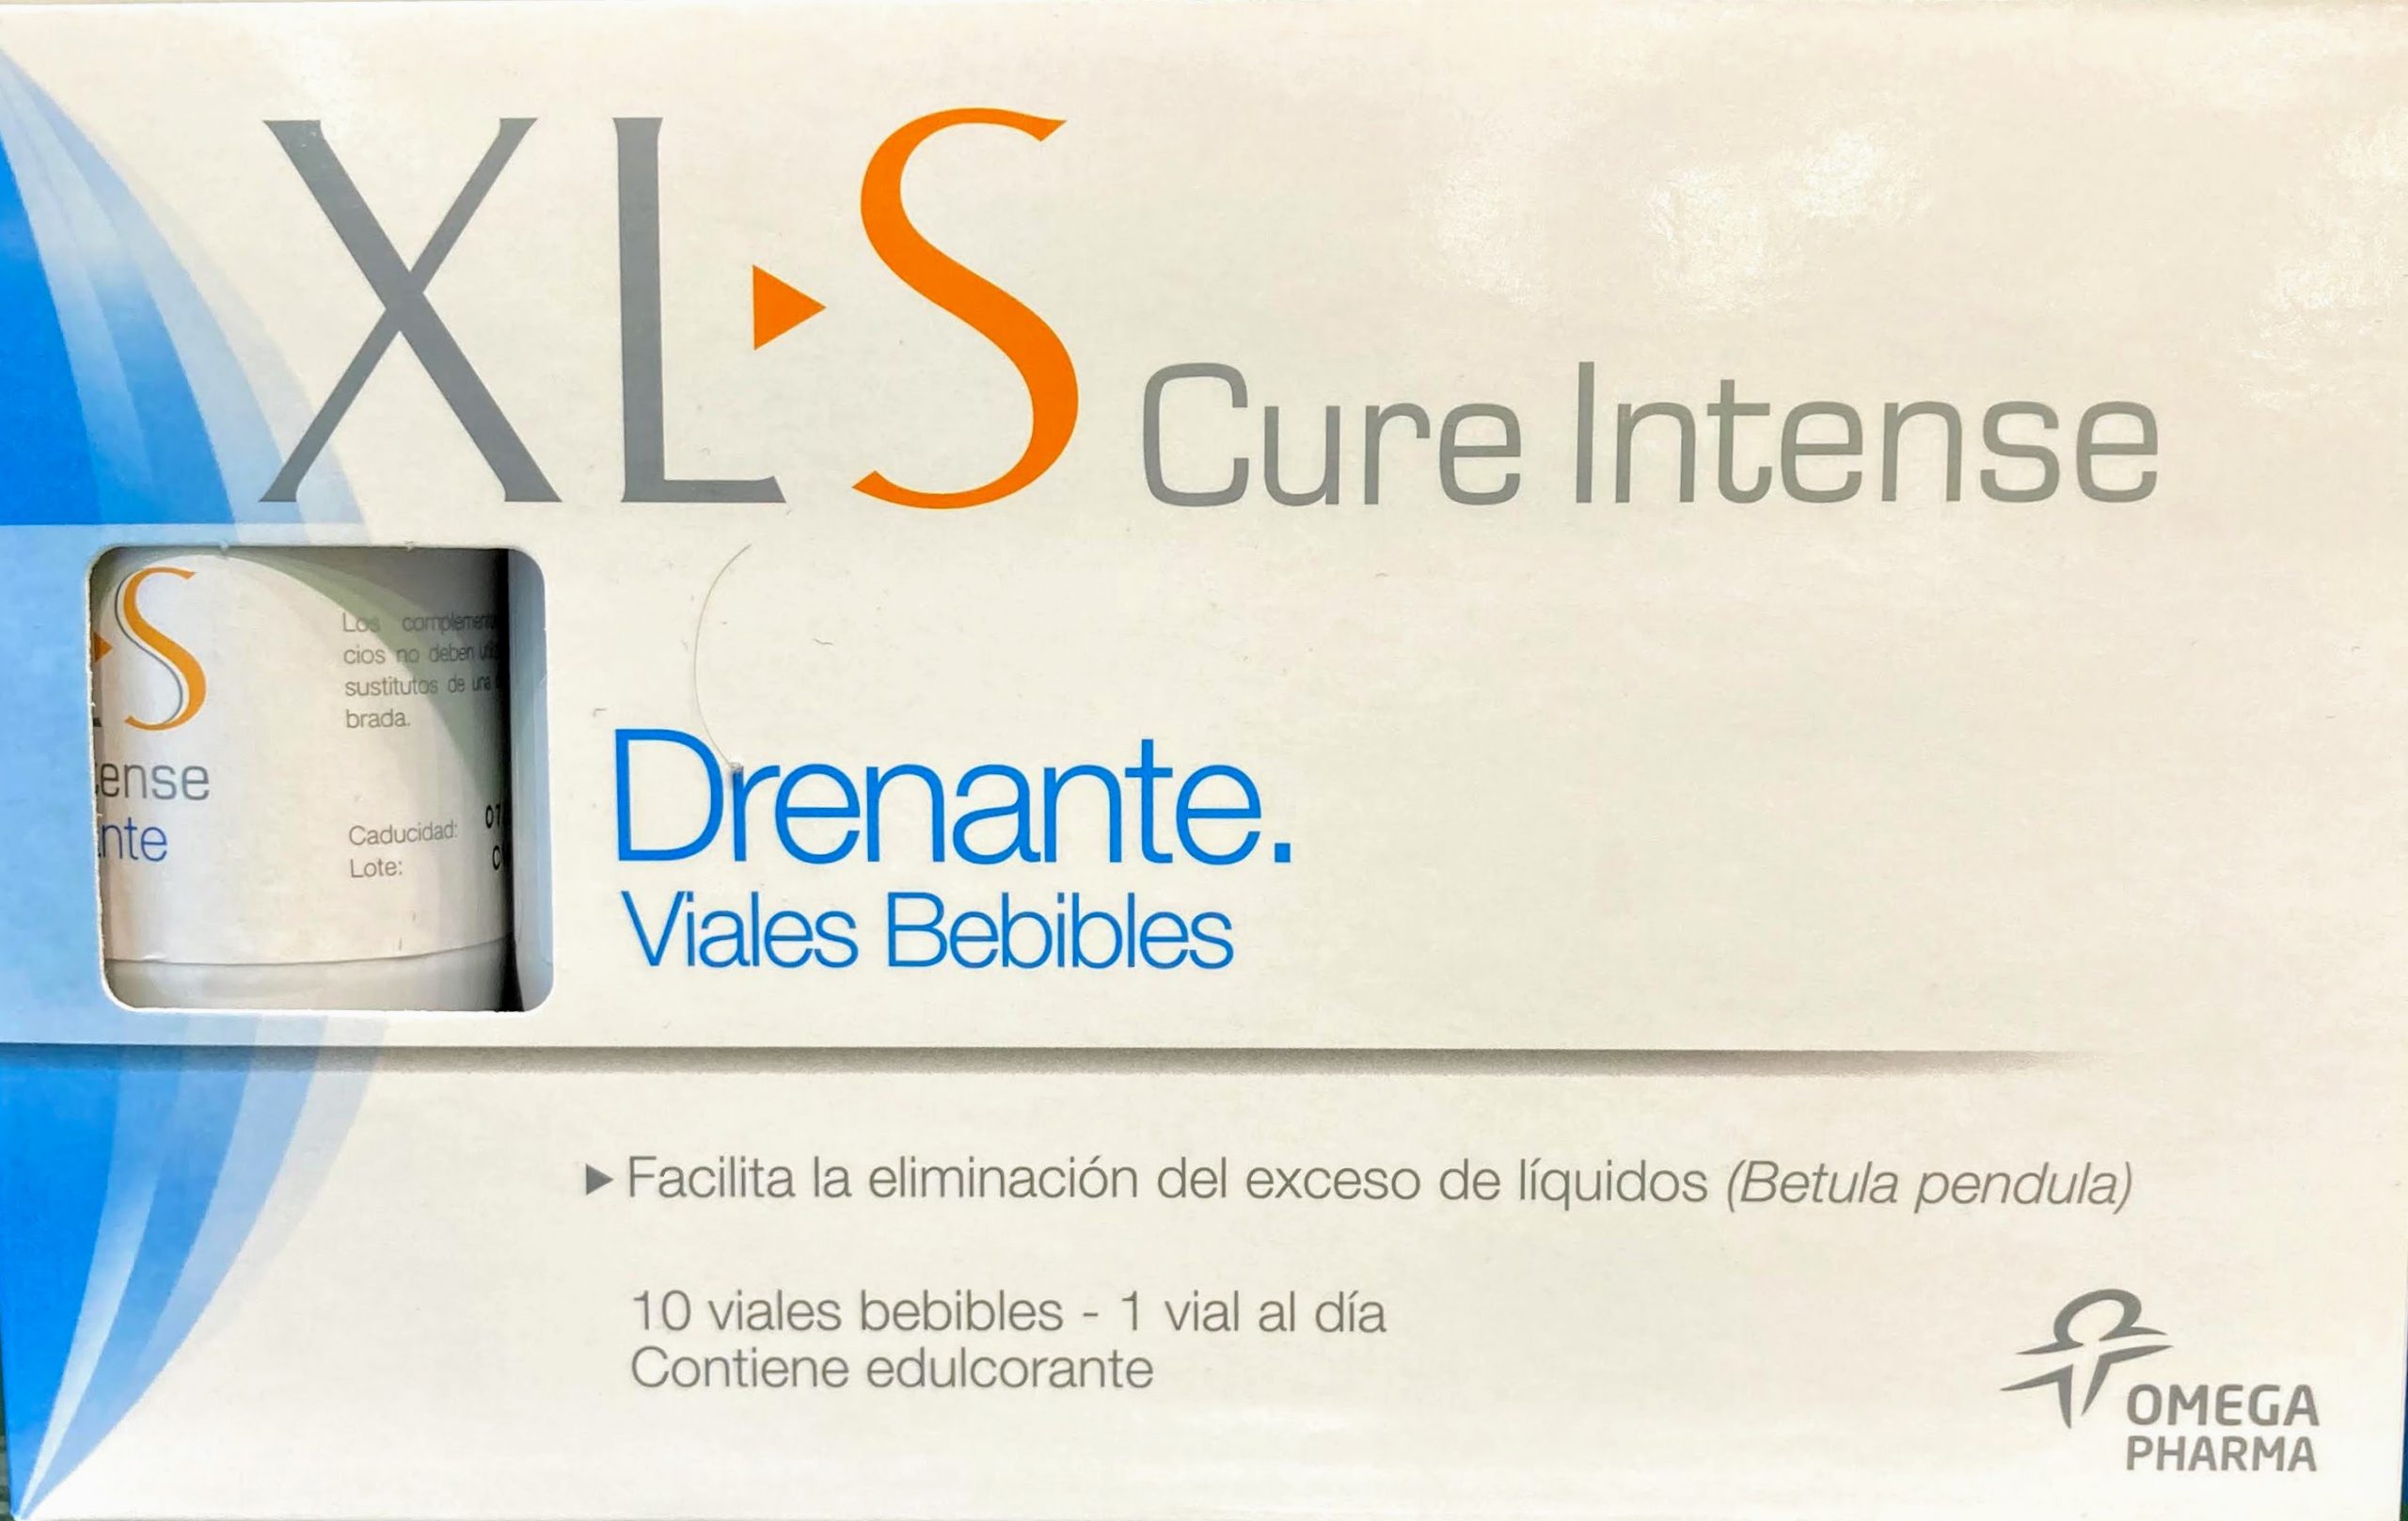 DRENANTE XL-S CURE INTENSE 10 VIALES BEBIBLES OMEGA PHARMA